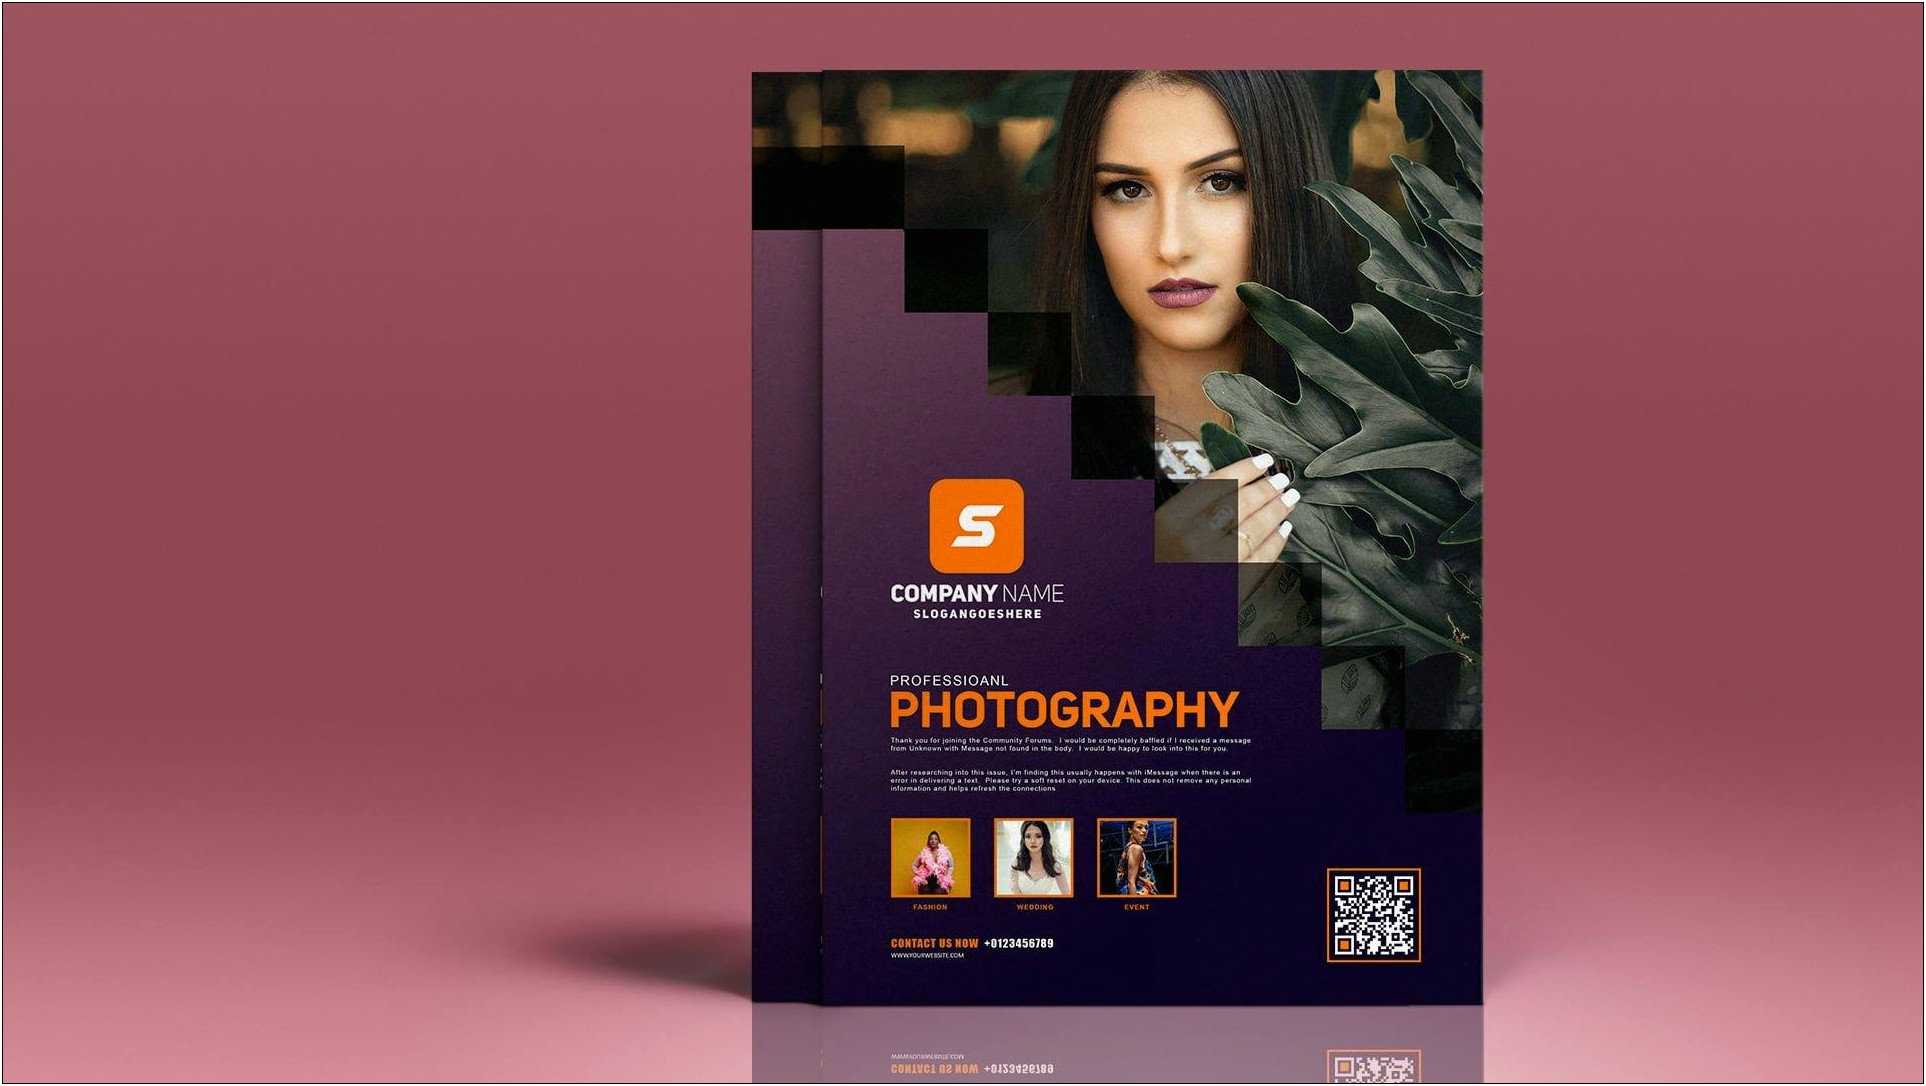 free-photography-marketing-templates-for-photoshop-templates-resume-designs-3p15wgogrx